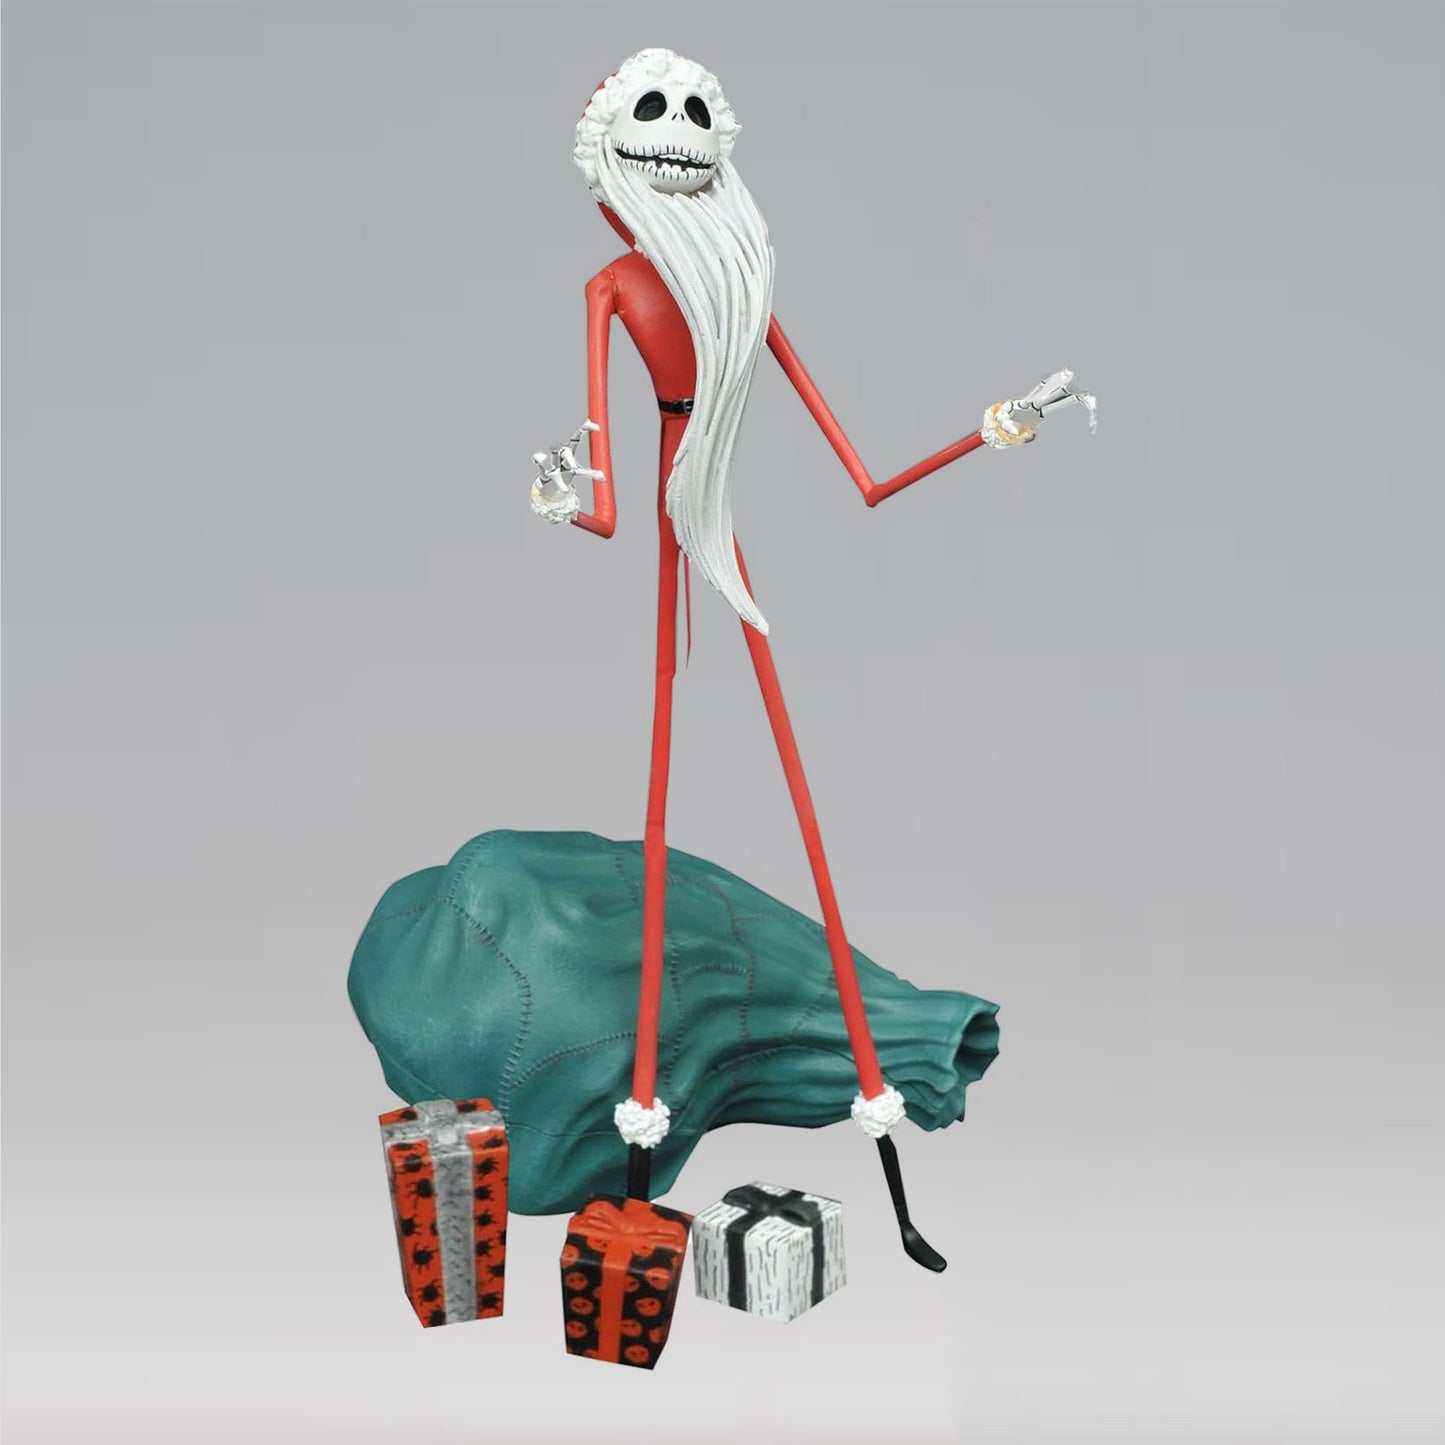 The Nightmare Before Christmas - Jack Skellington Black - POP! Art Series  action figure 7